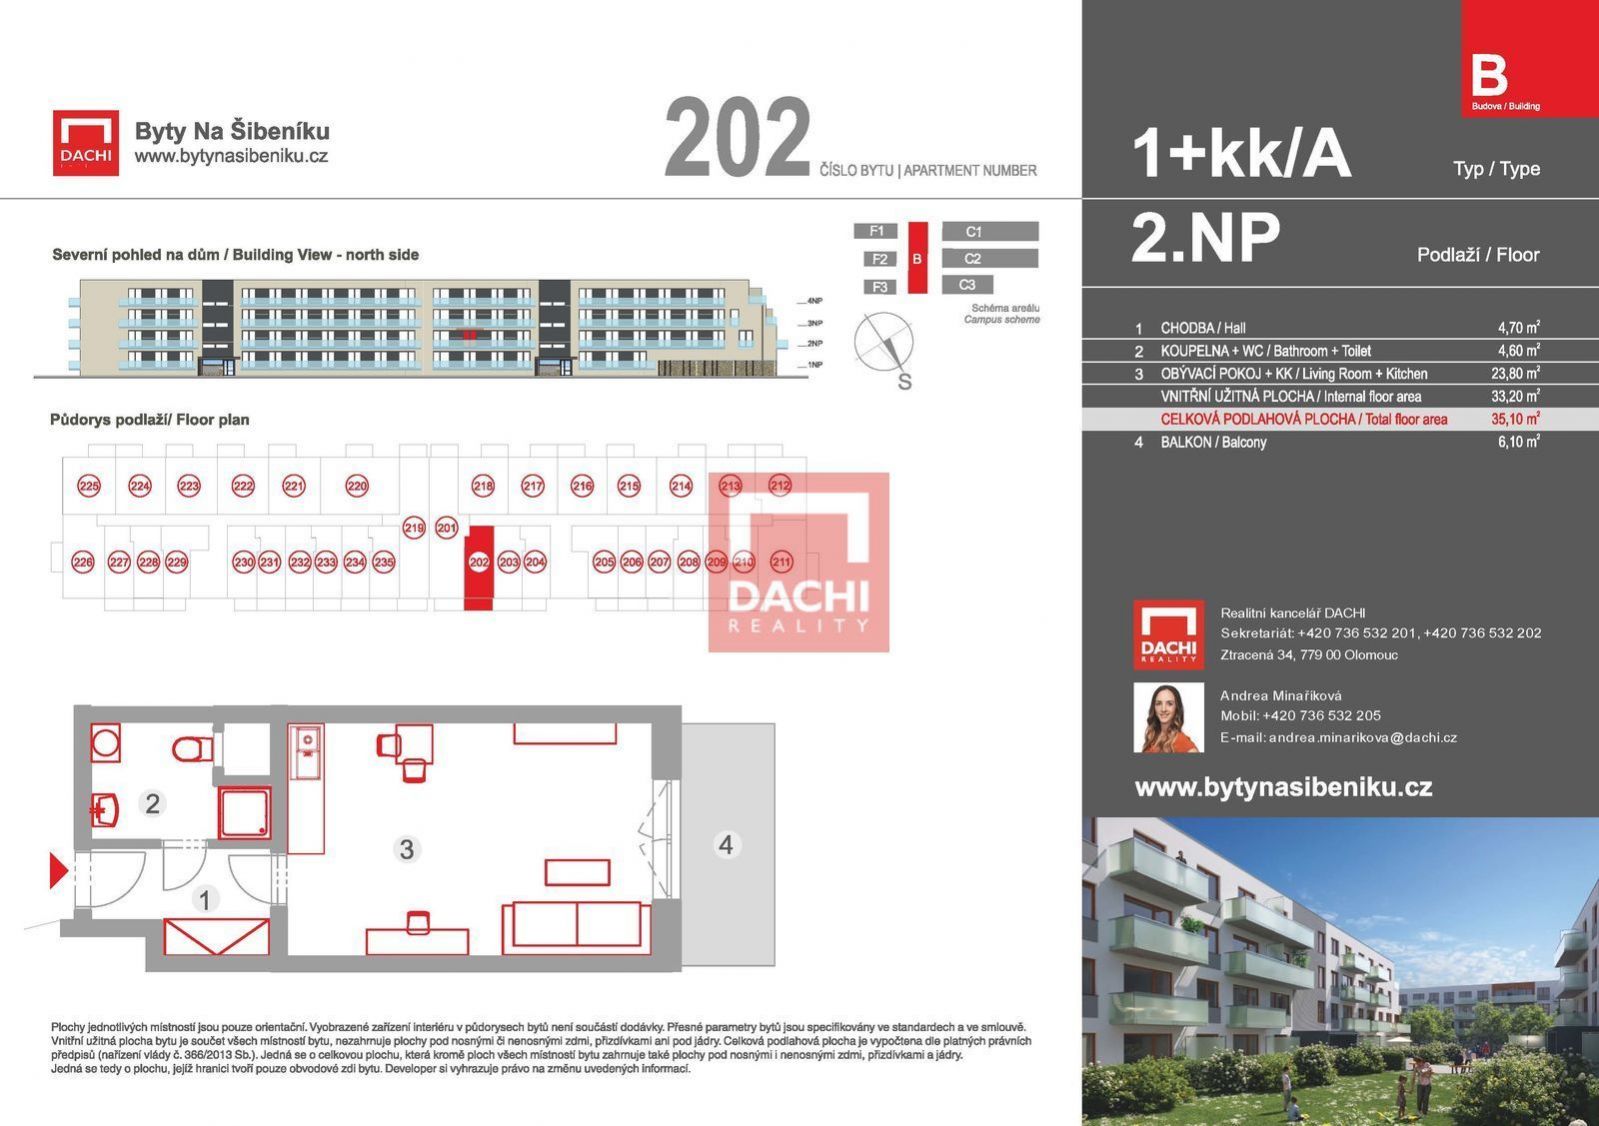 Prodej ateliéru B.202  1+kk  35,10m s balkonem 6,10m, Olomouc, Byty Na Šibeníku II.etapa, obrázek č. 3